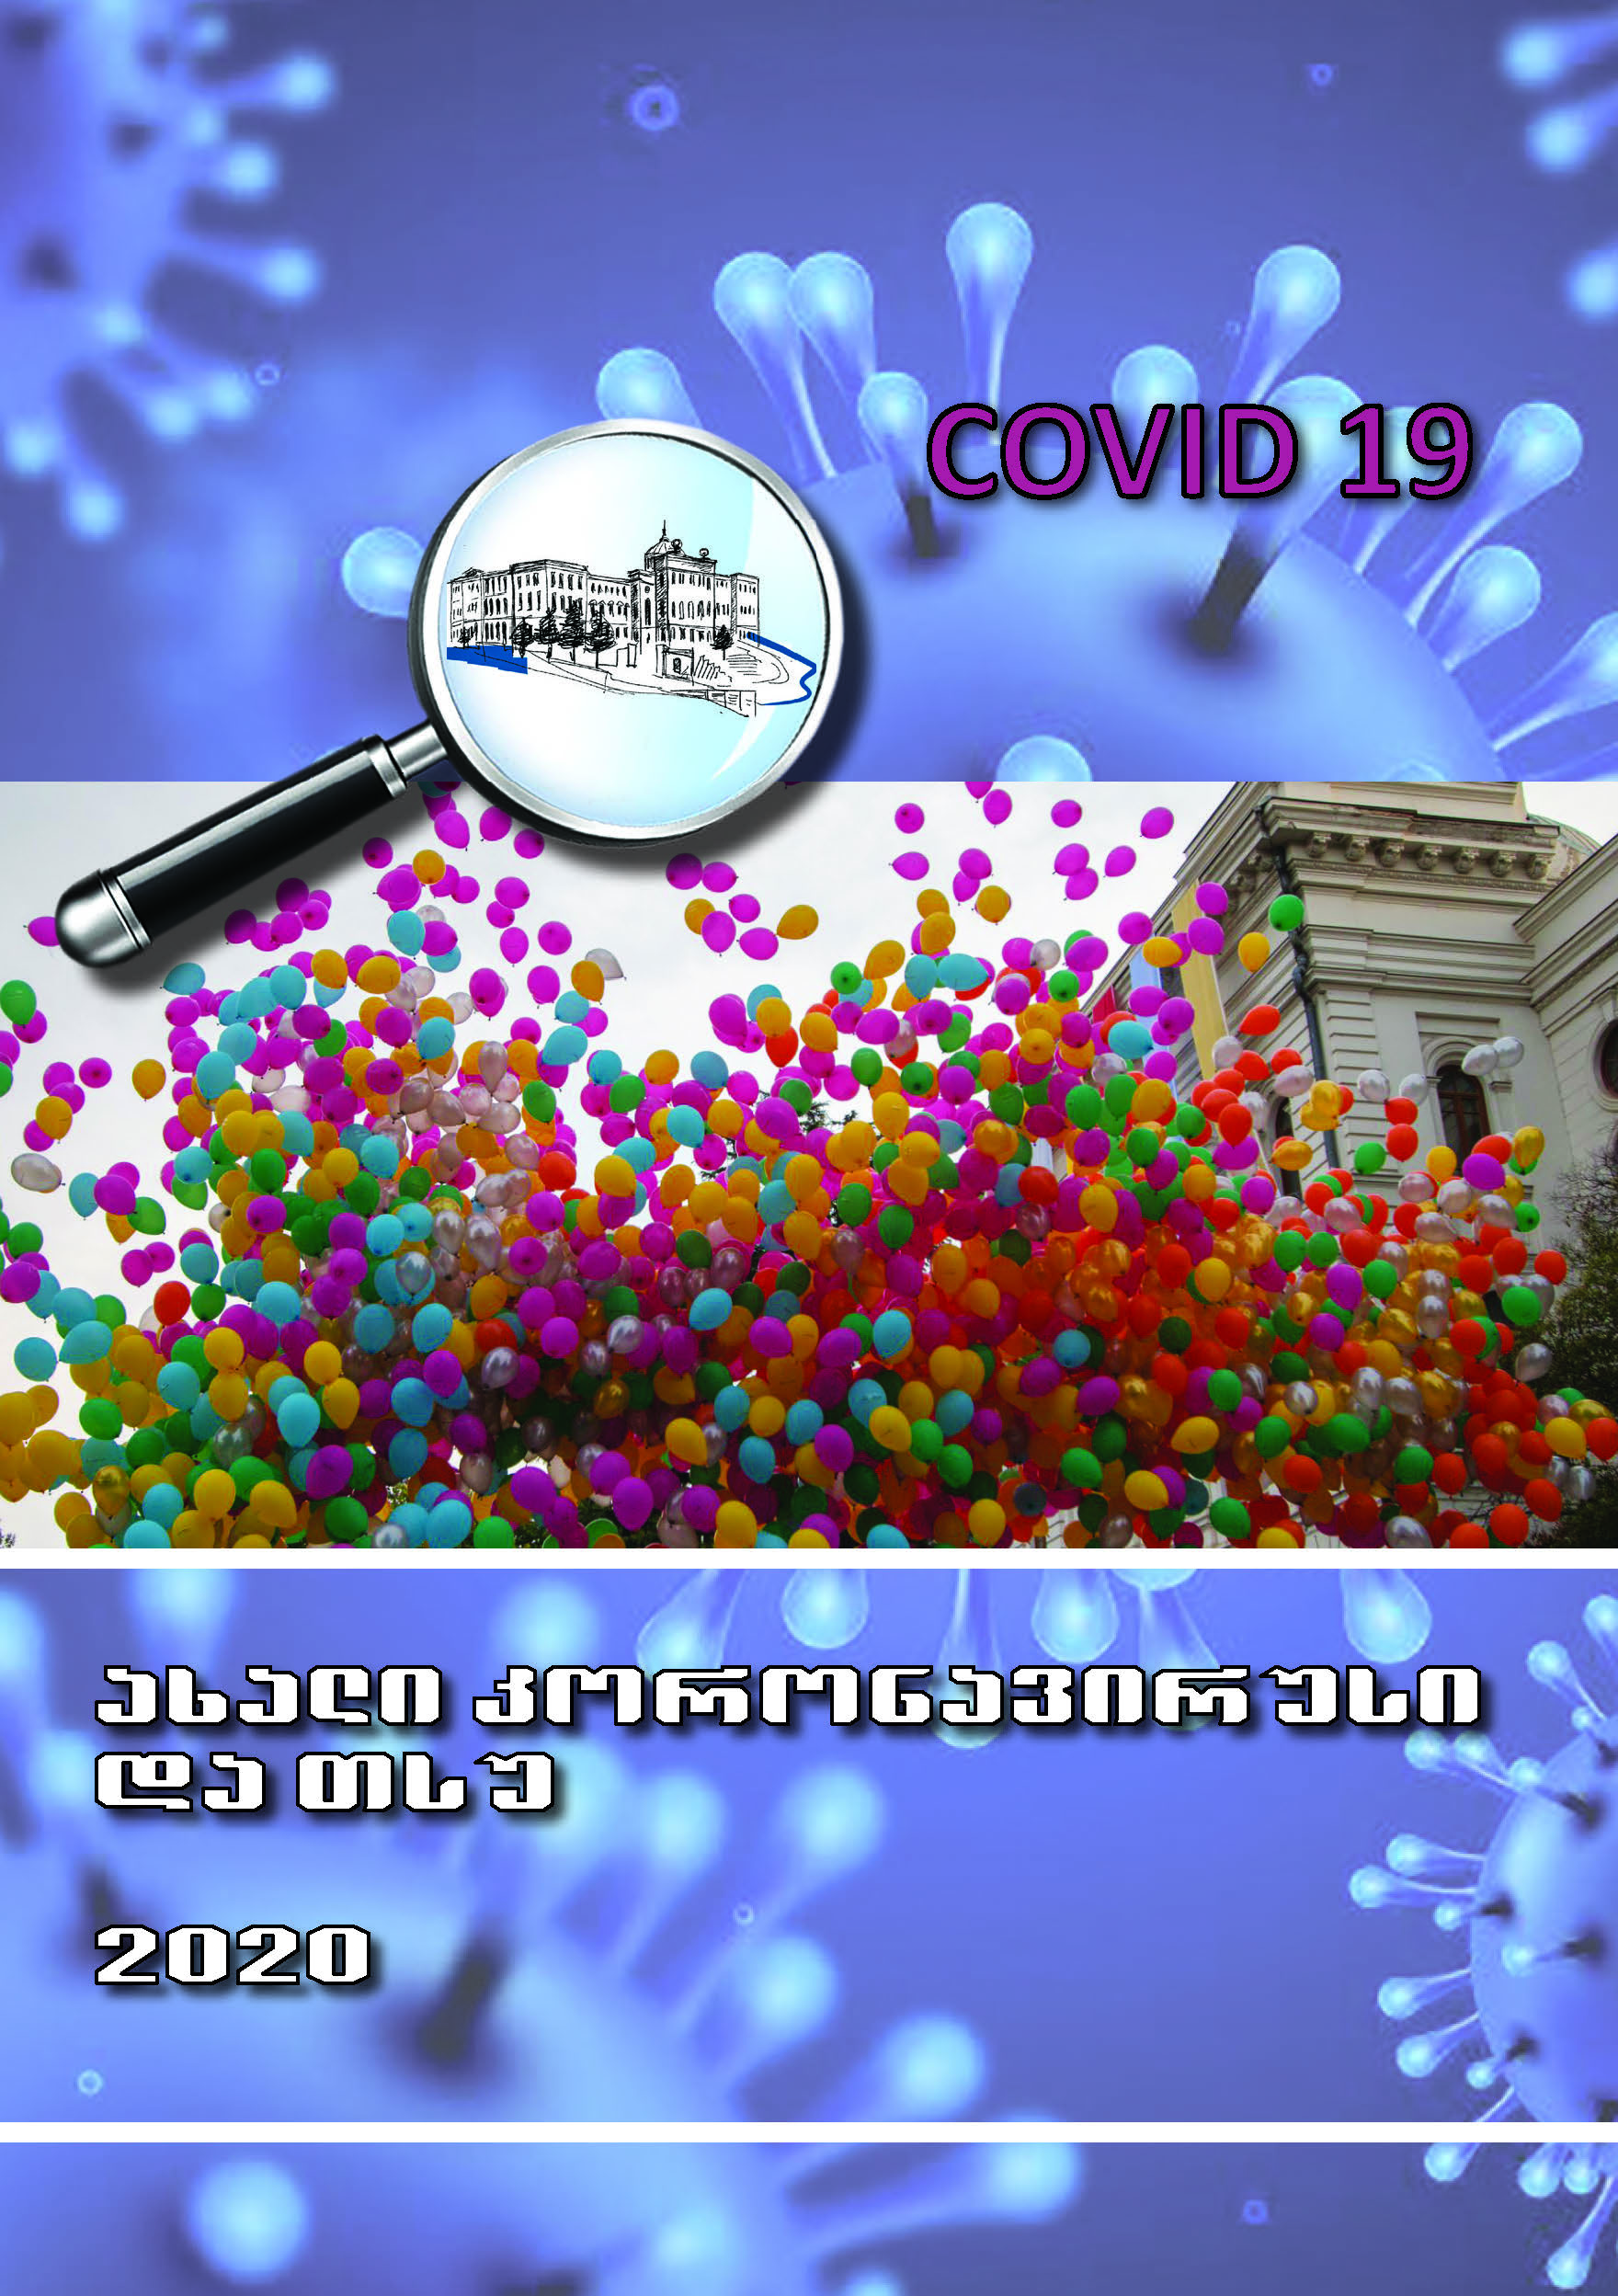 COVID 19 - ახალი კორონავირუსი და თსუ 2020